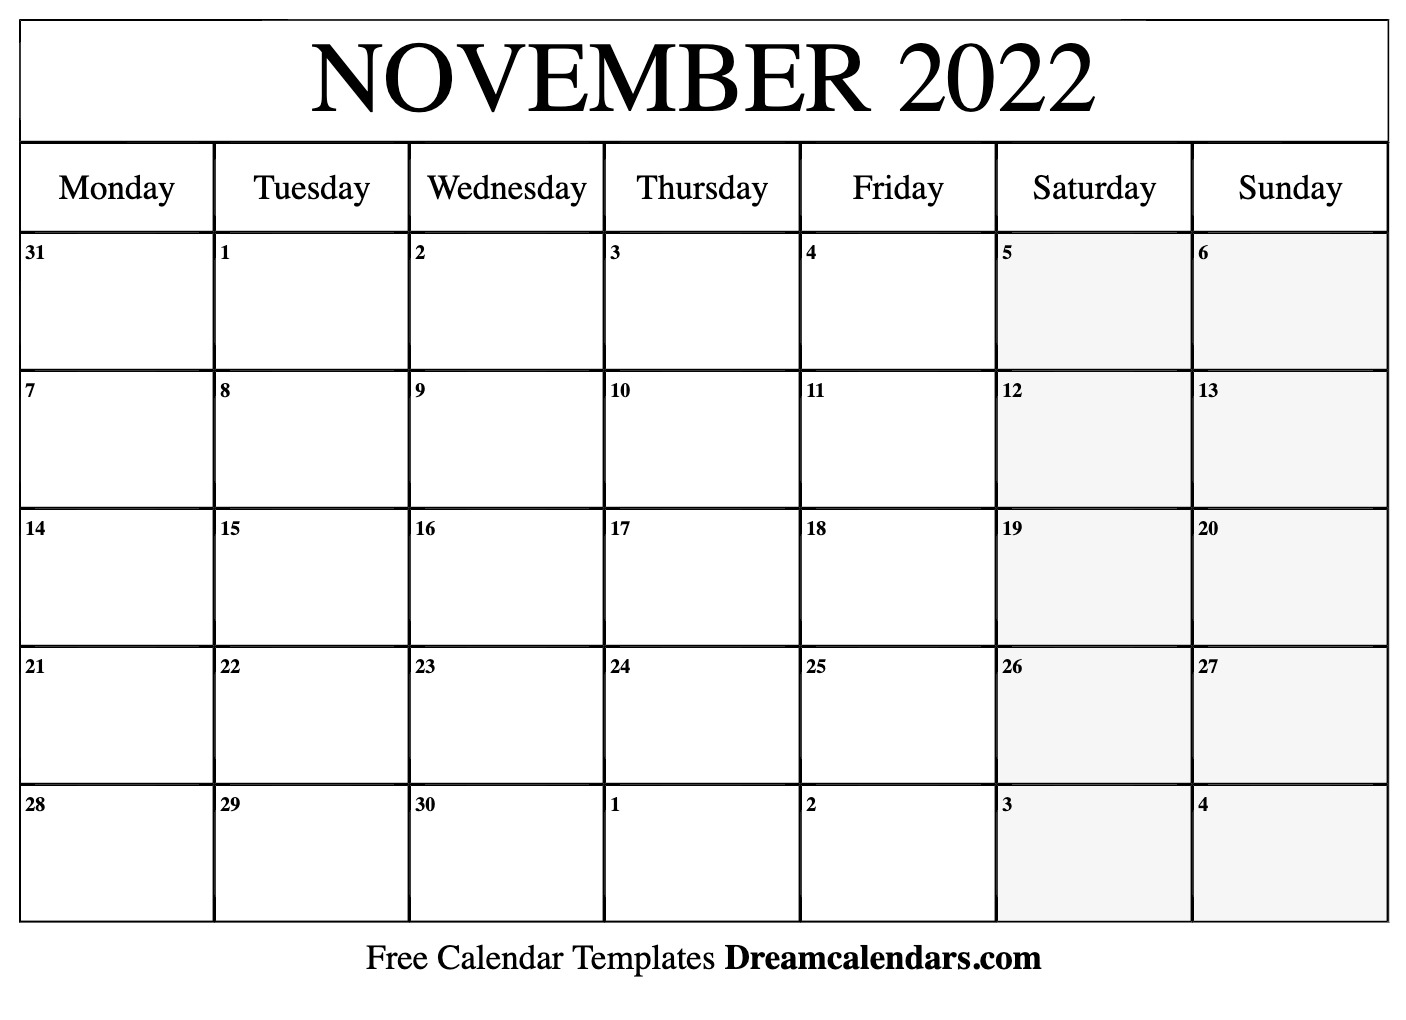 November 2022 Calendar Free Printable Download Printable November 2022 Calendars